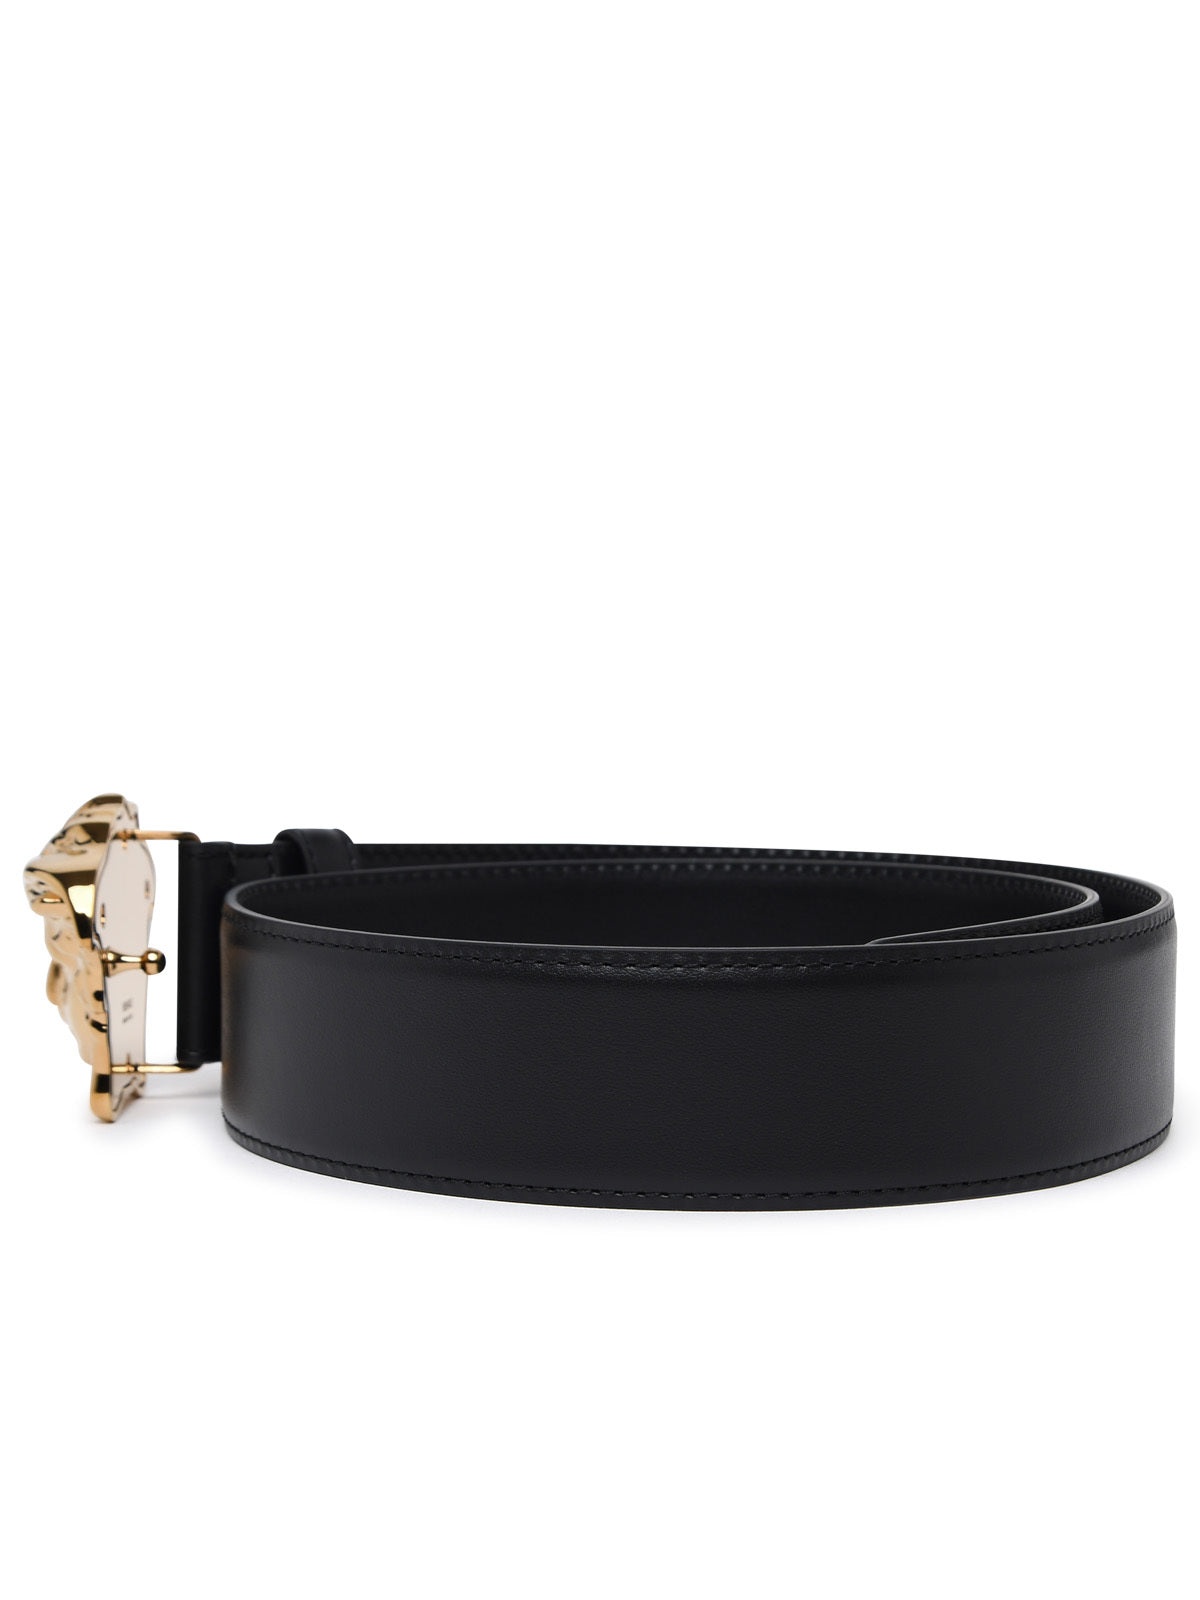 Versace Woman Black Leather Belt - 2